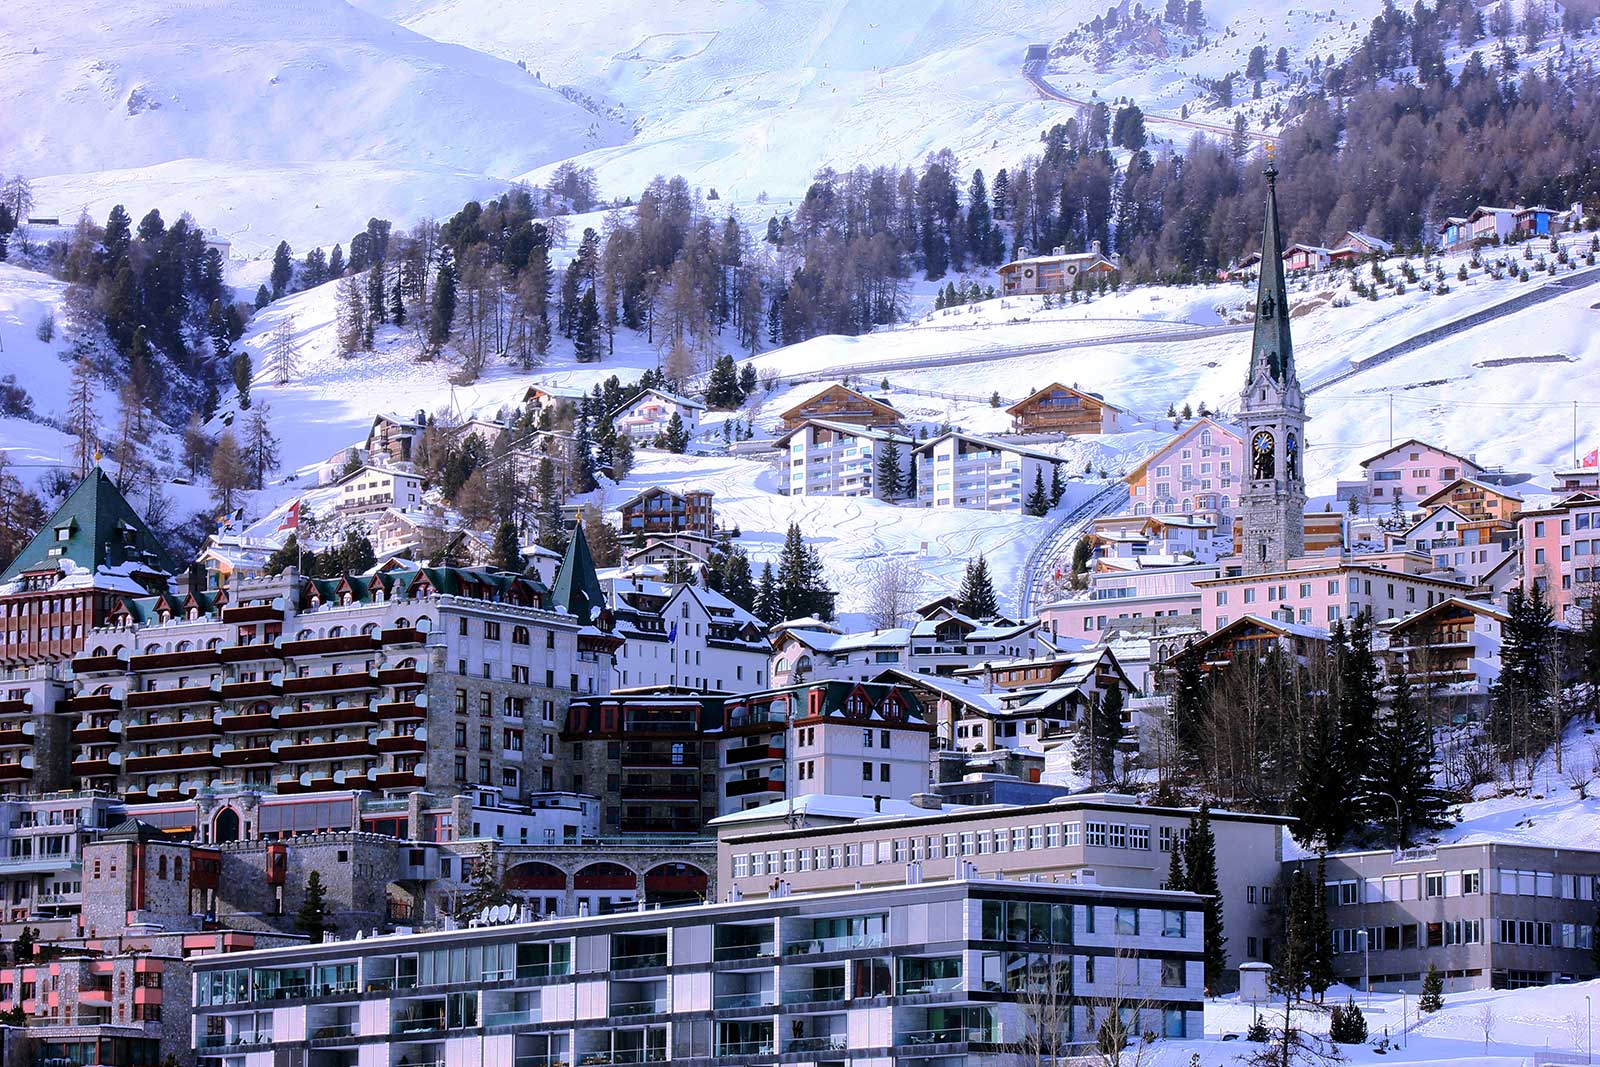 St. Moritz ski resort, Switzerland